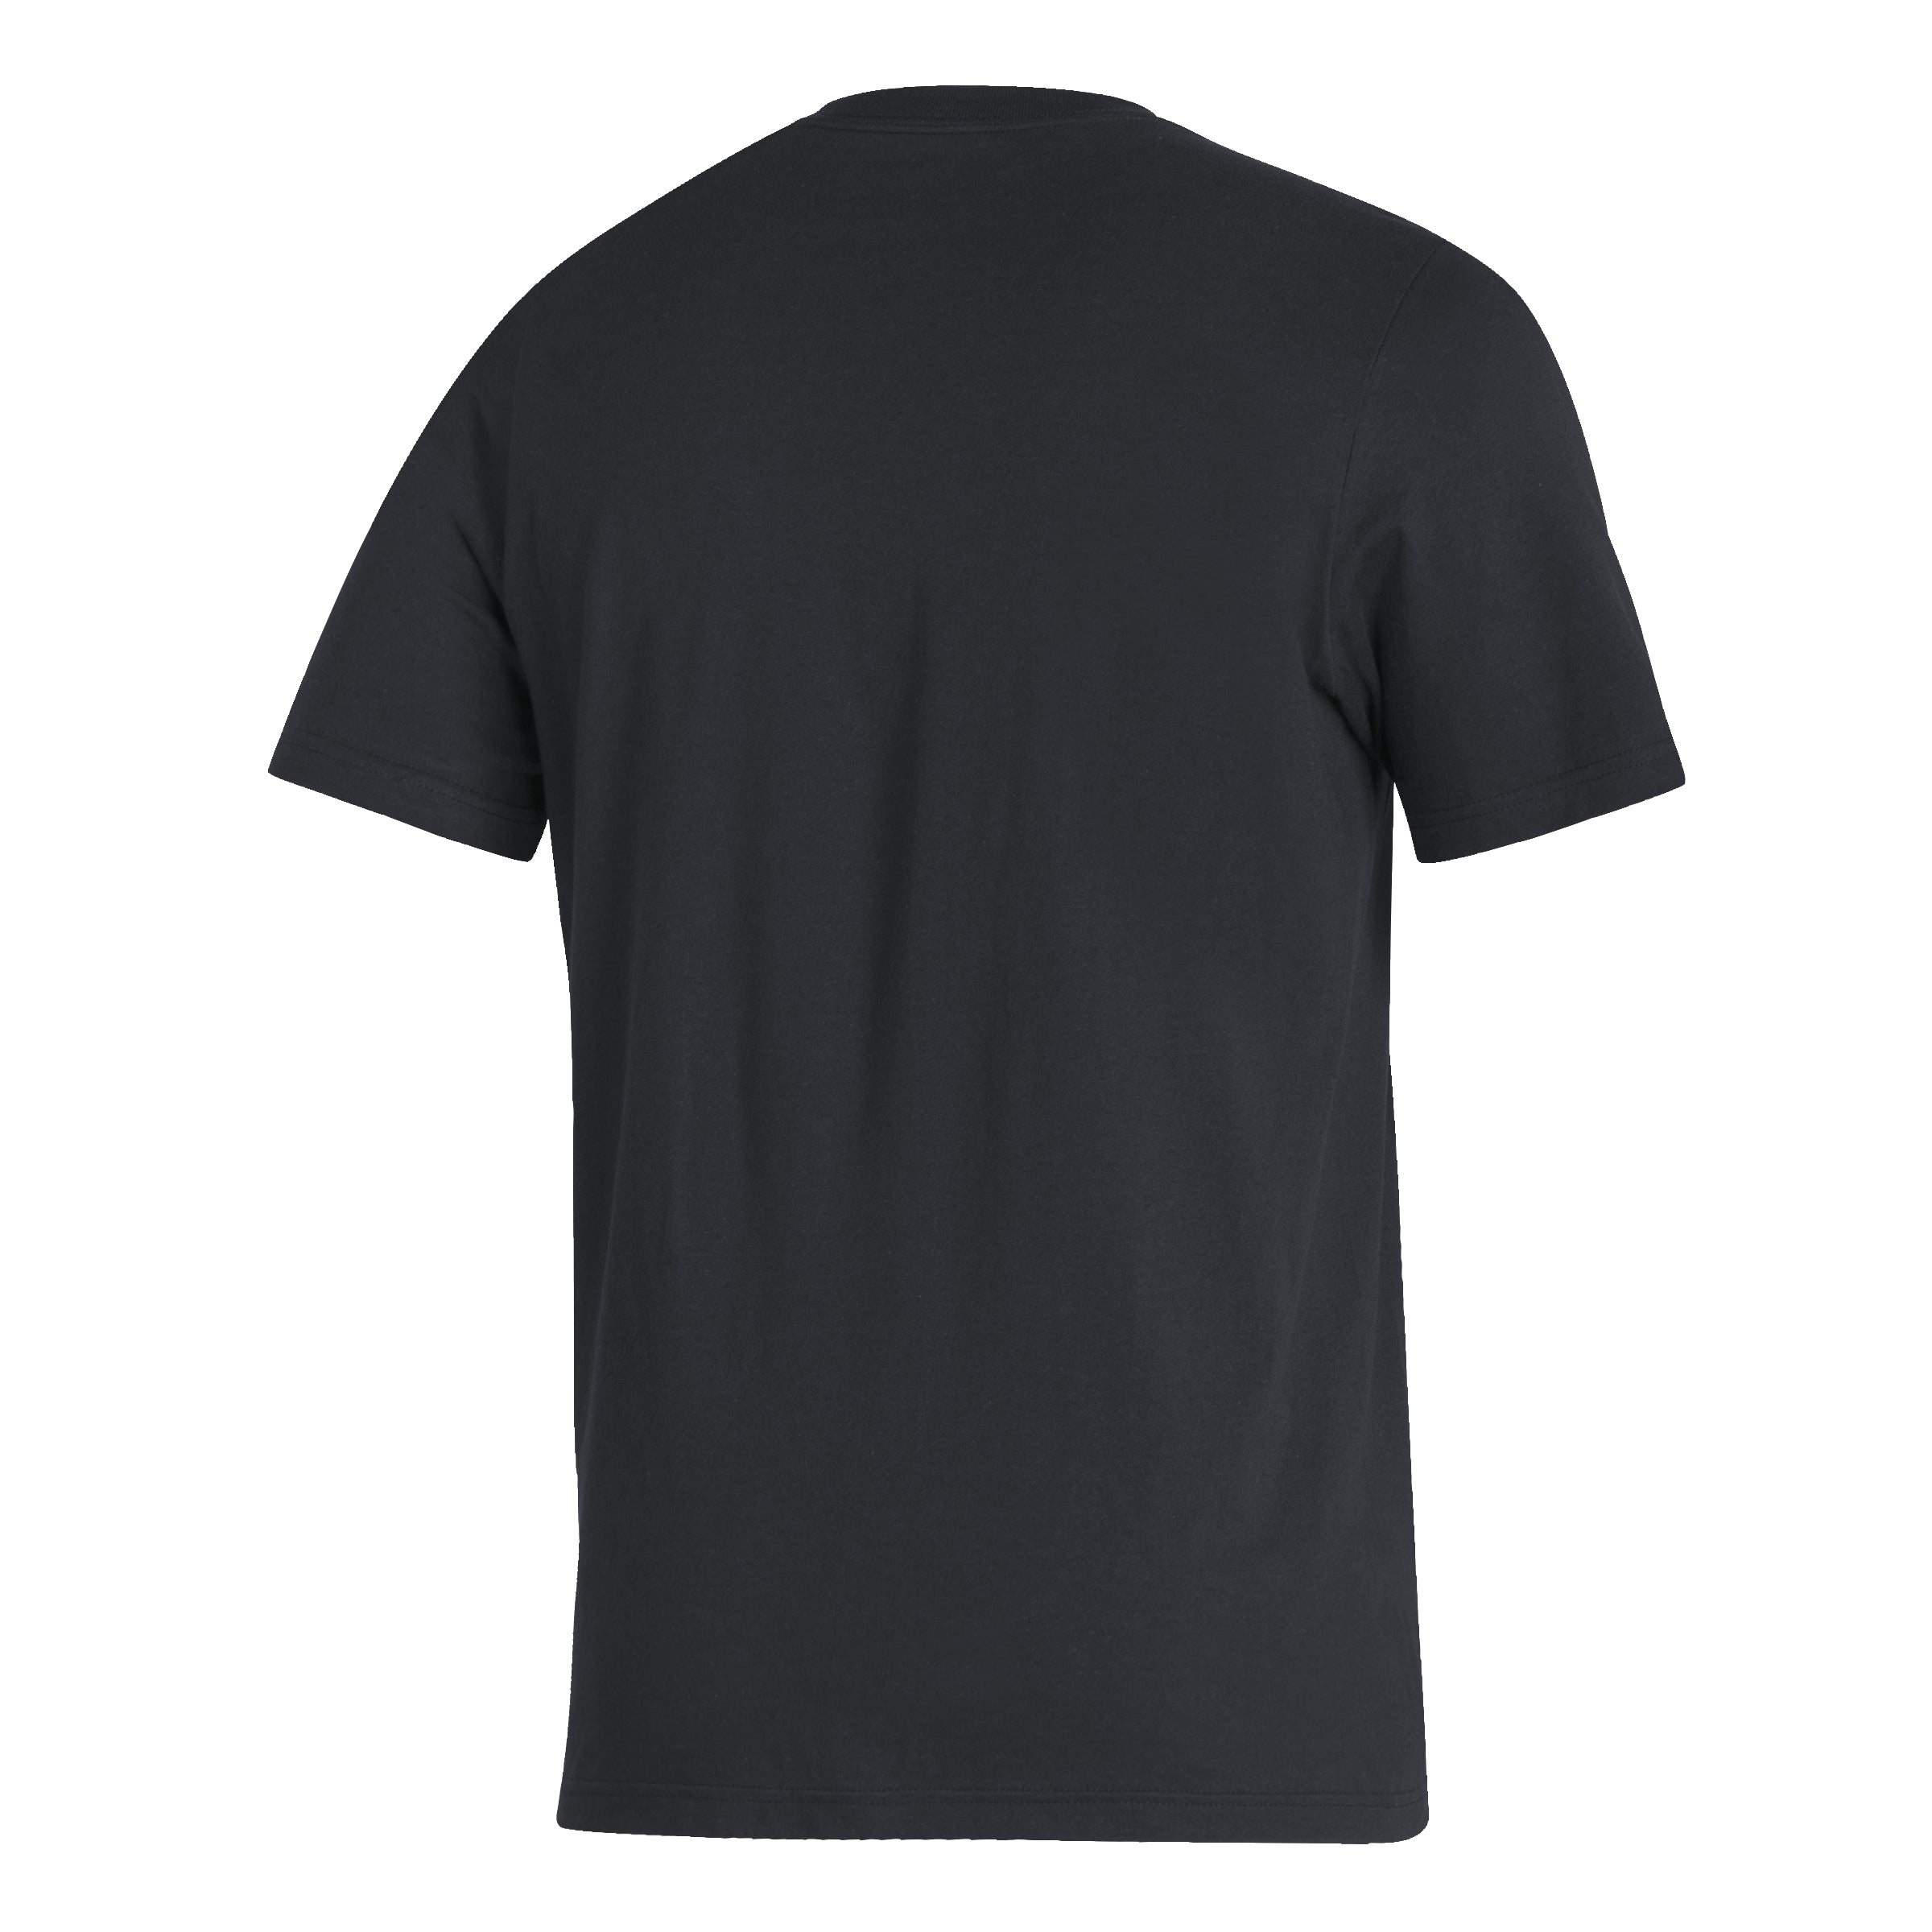 Miami Hurricanes adidas Basketball Amplifier T-Shirt - Black